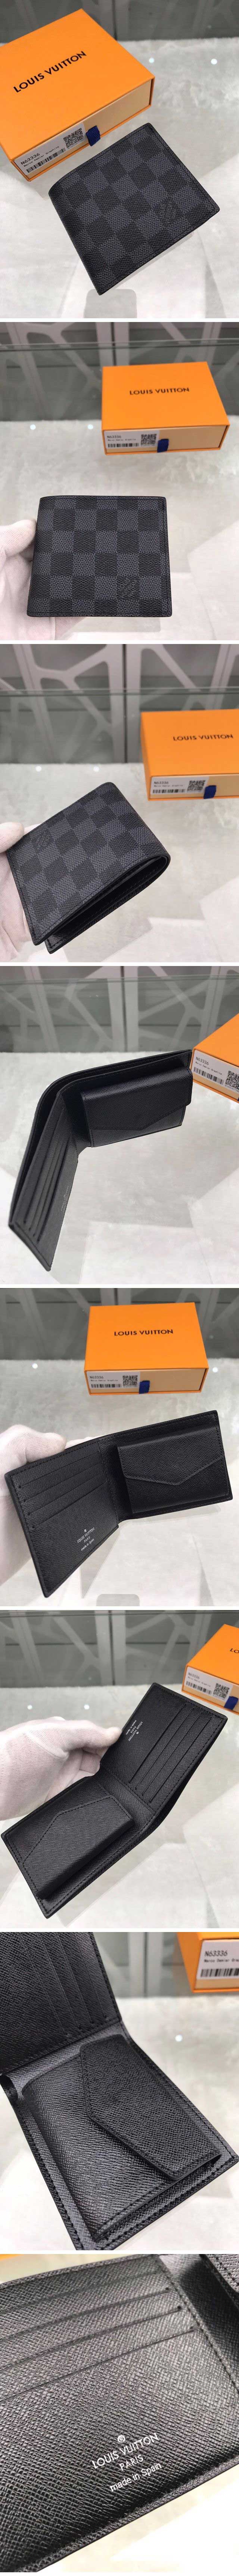 Louis Vuitton ルイヴィトン N63336 ポルトフォイユ マルコ NM ダミエ グラフィット